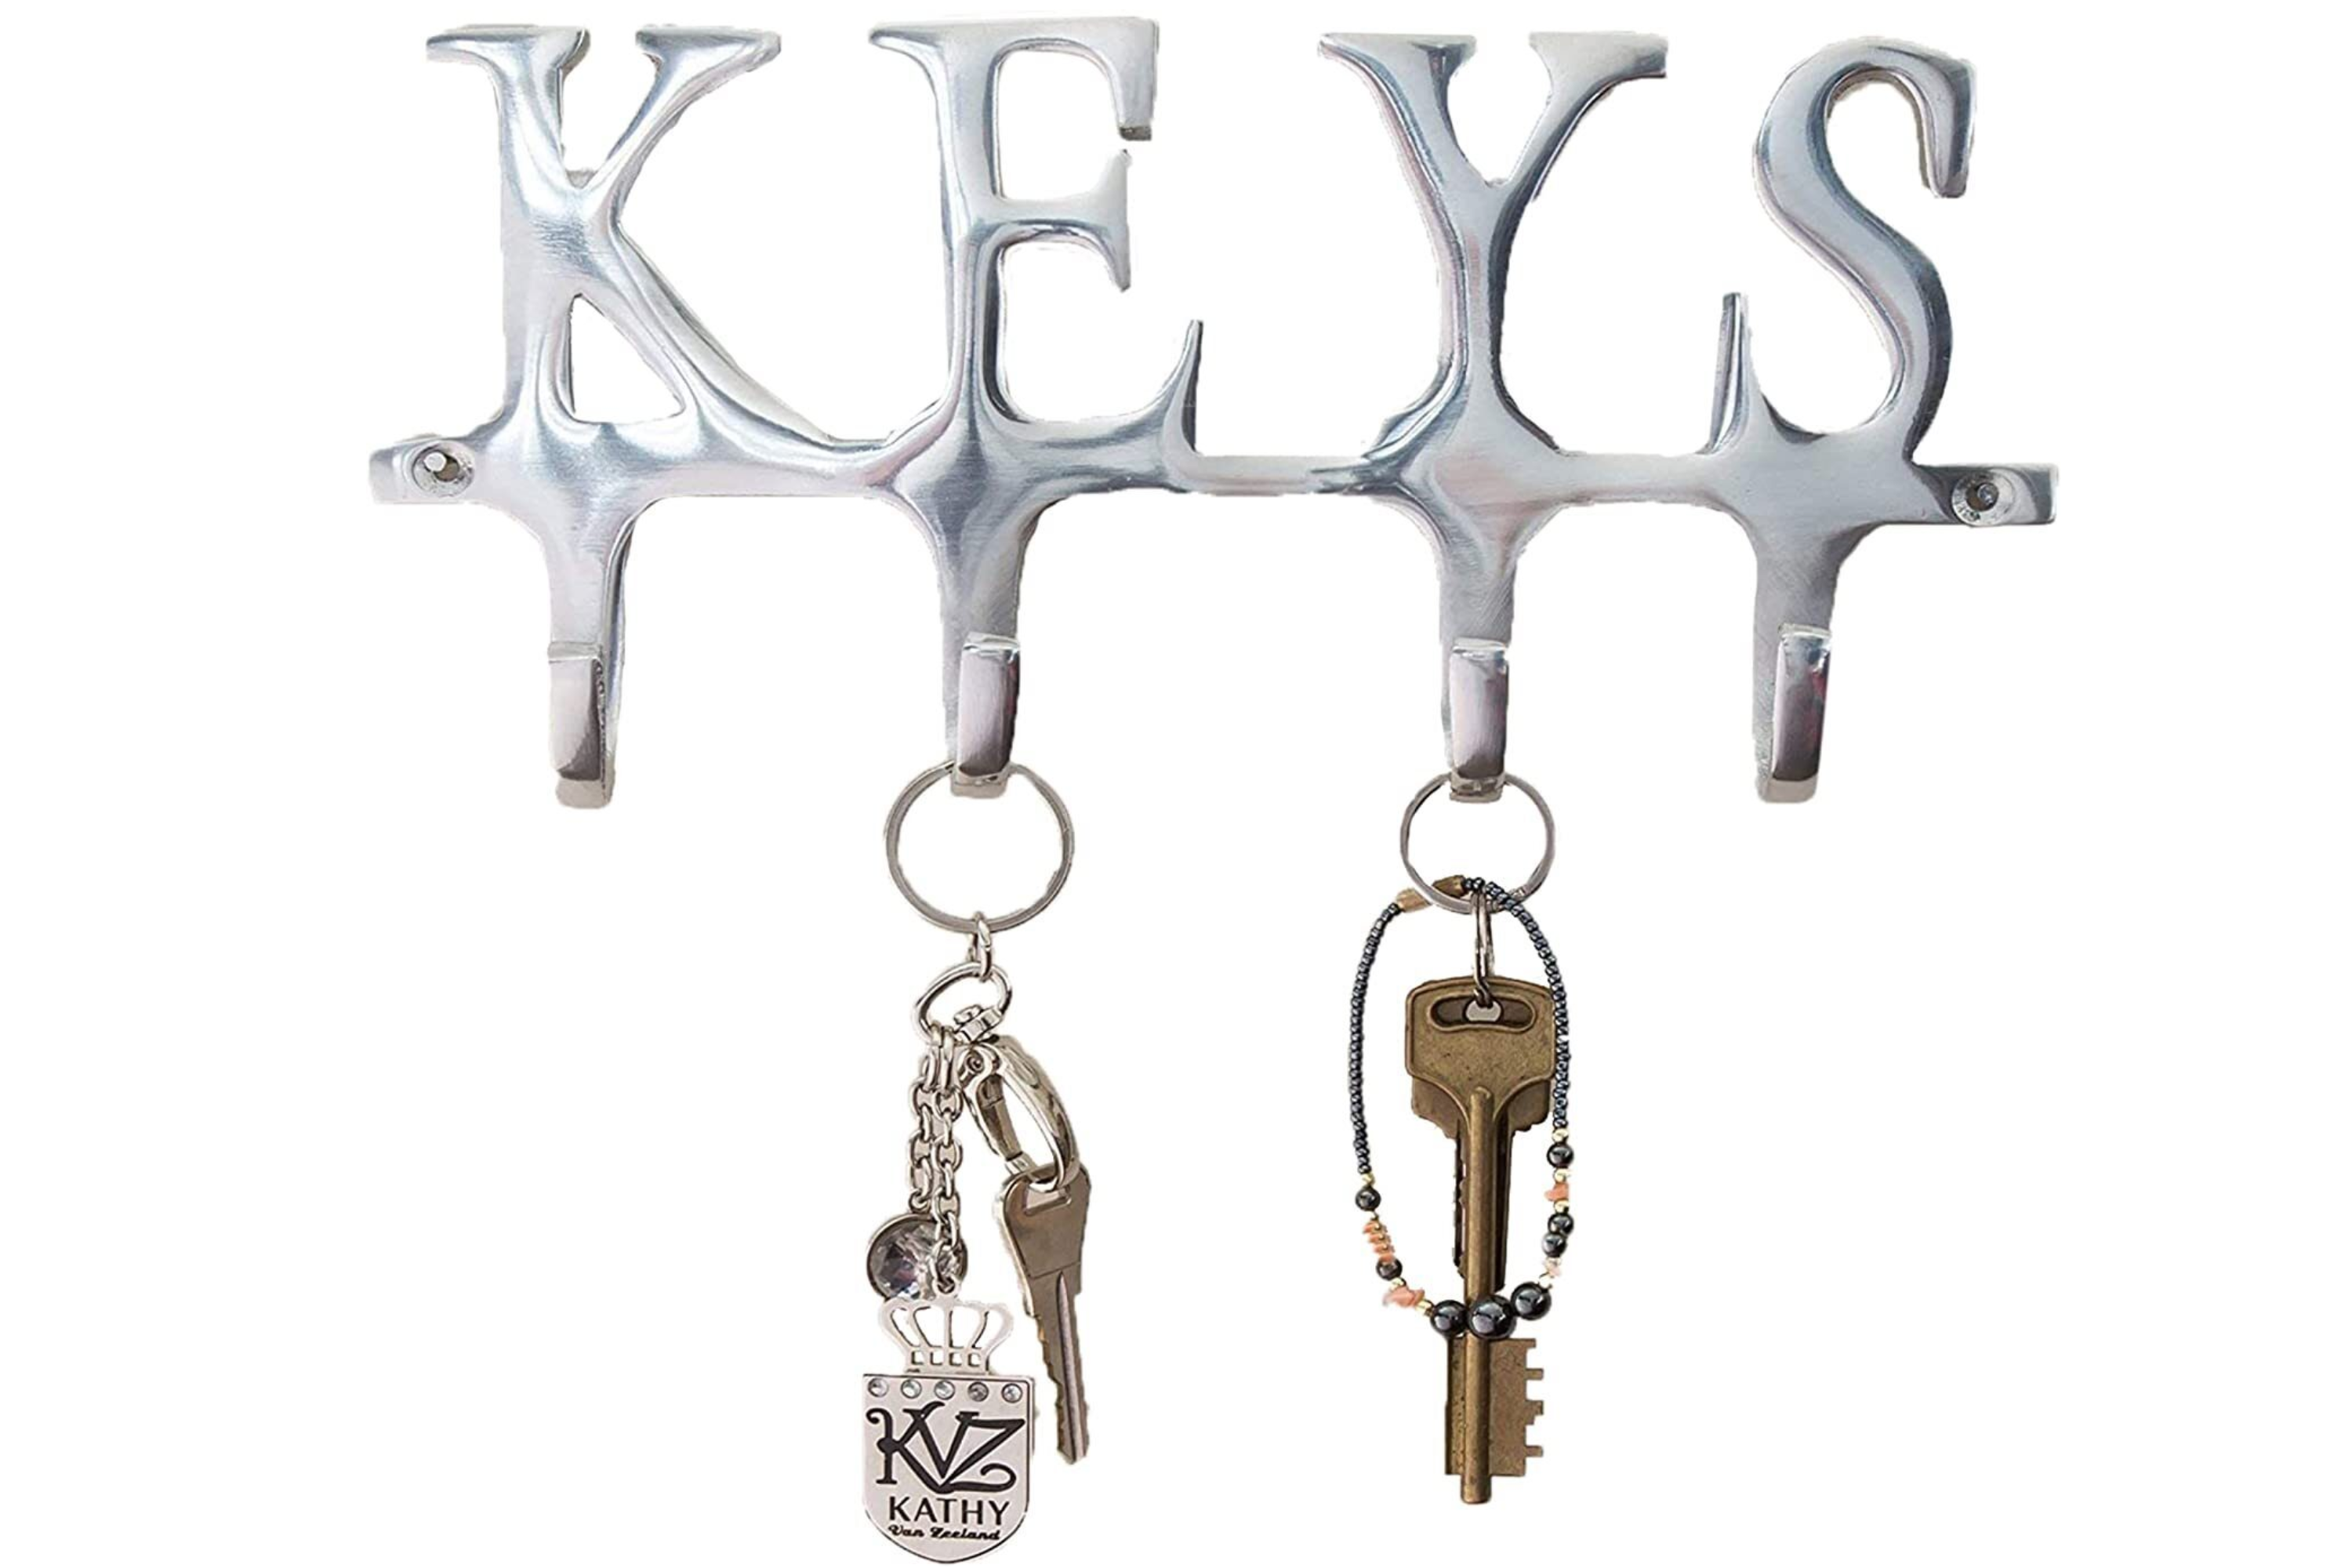 Comfify Key Holder for Wall - Cast Iron Decorative Farmhouse Rustic Wall  Mount Key Organizer - 4 Key…See more Comfify Key Holder for Wall - Cast  Iron